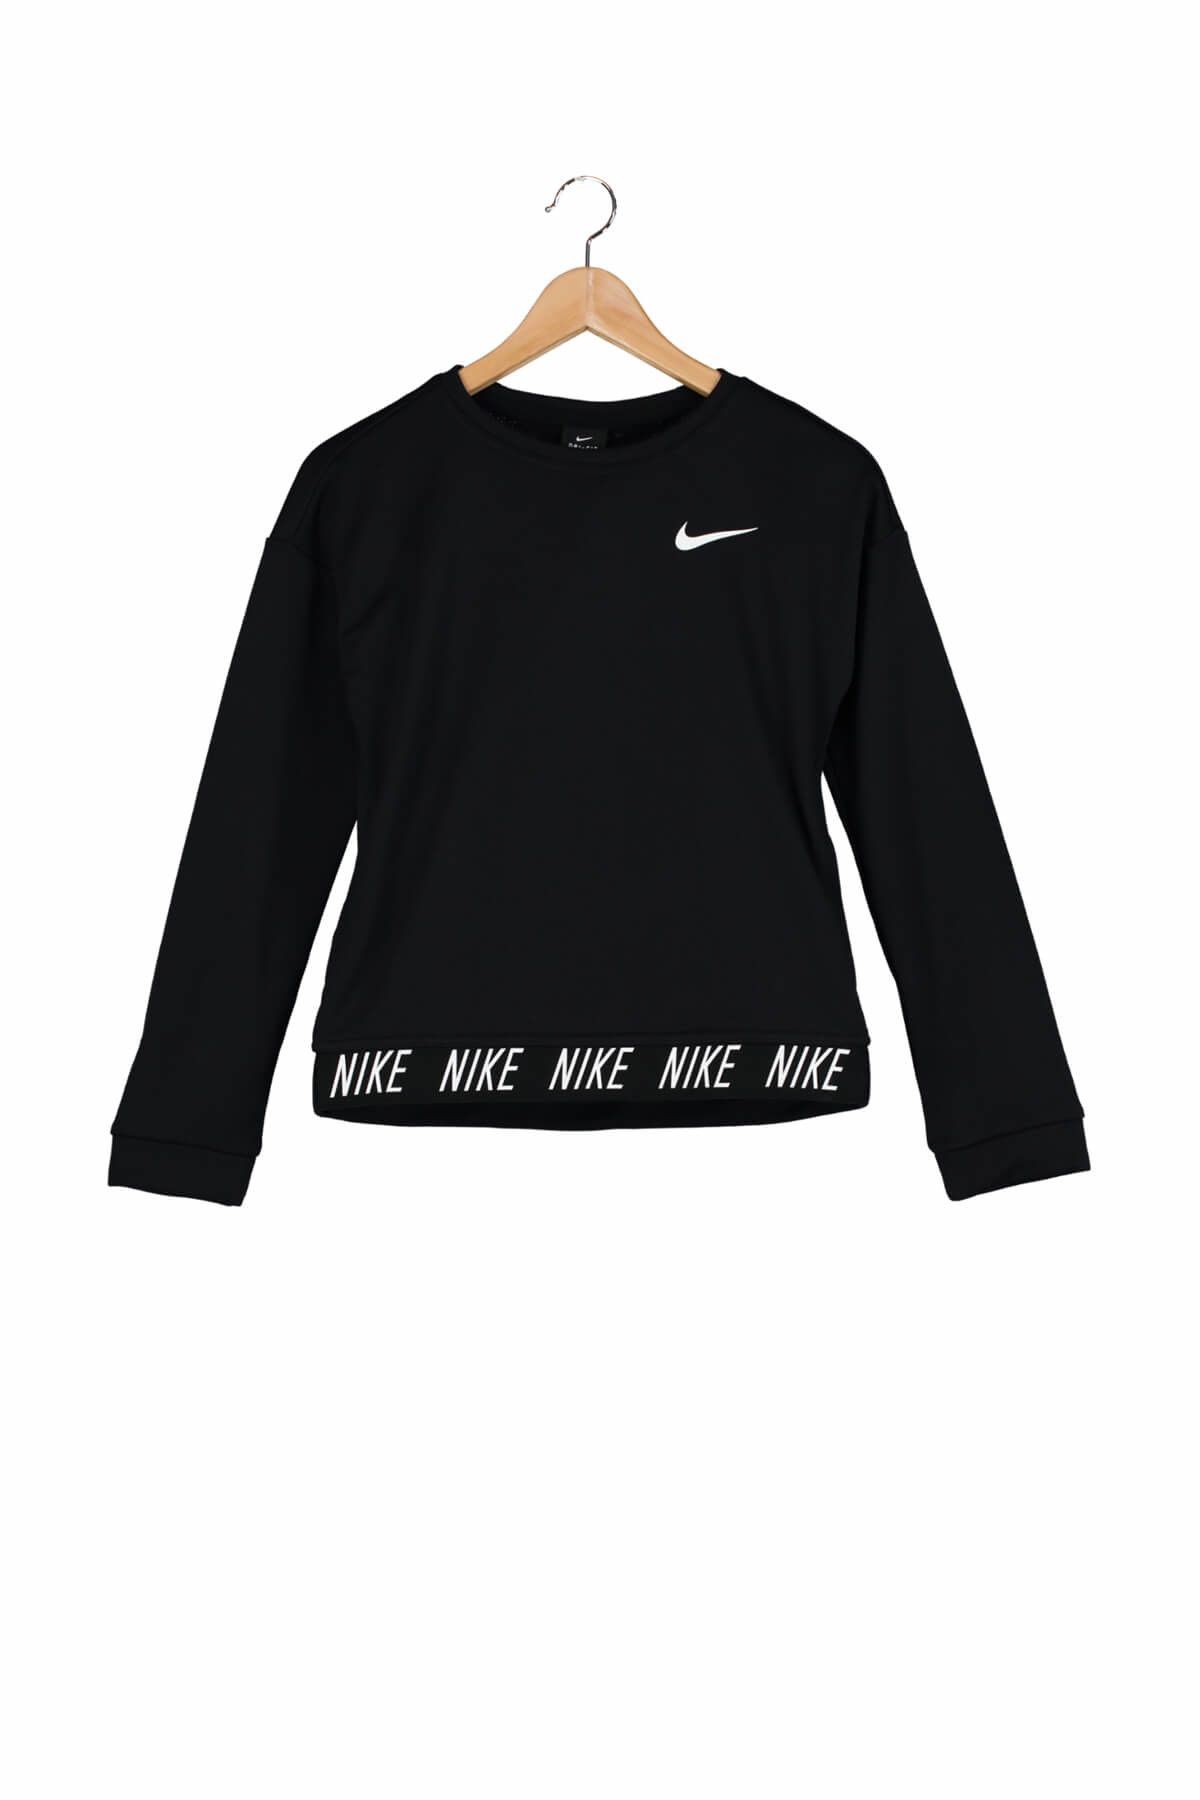 Nike Siyah Kız Çocuk Sweatshirt 890281-010